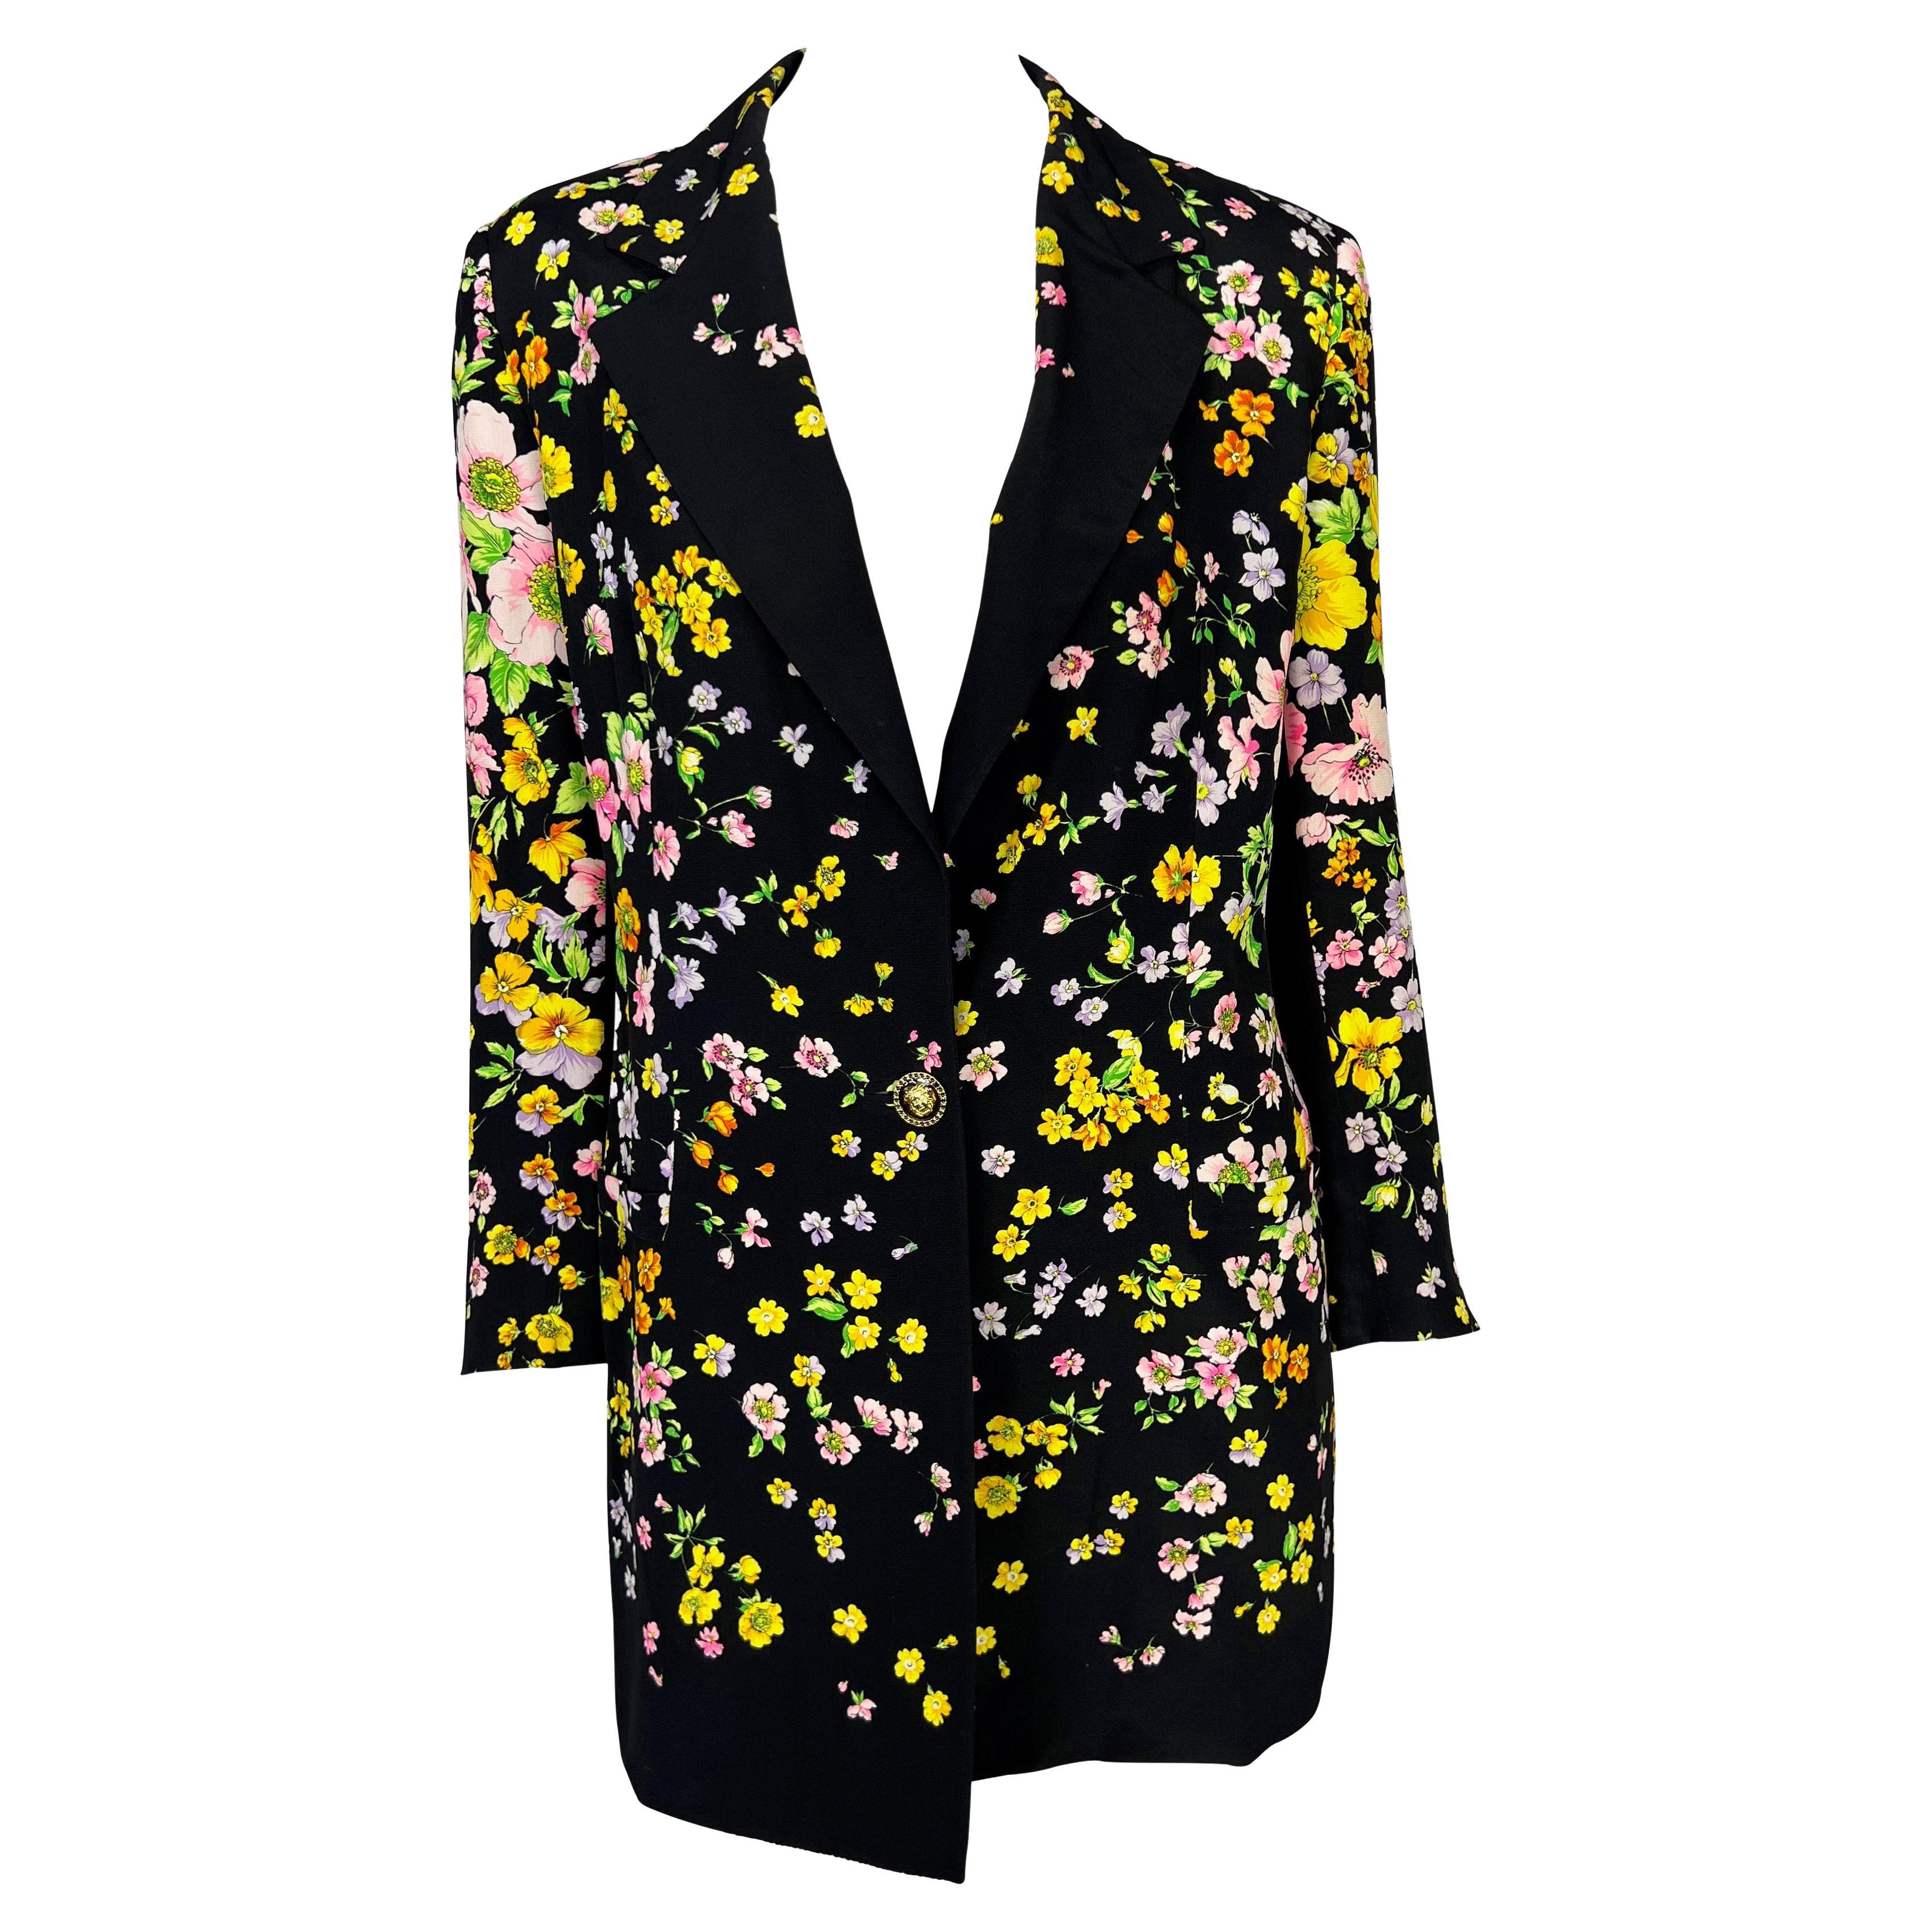 S/S 1993 Gianni Versace Couture Black Floral Print Silk Medusa Blazer Jacket